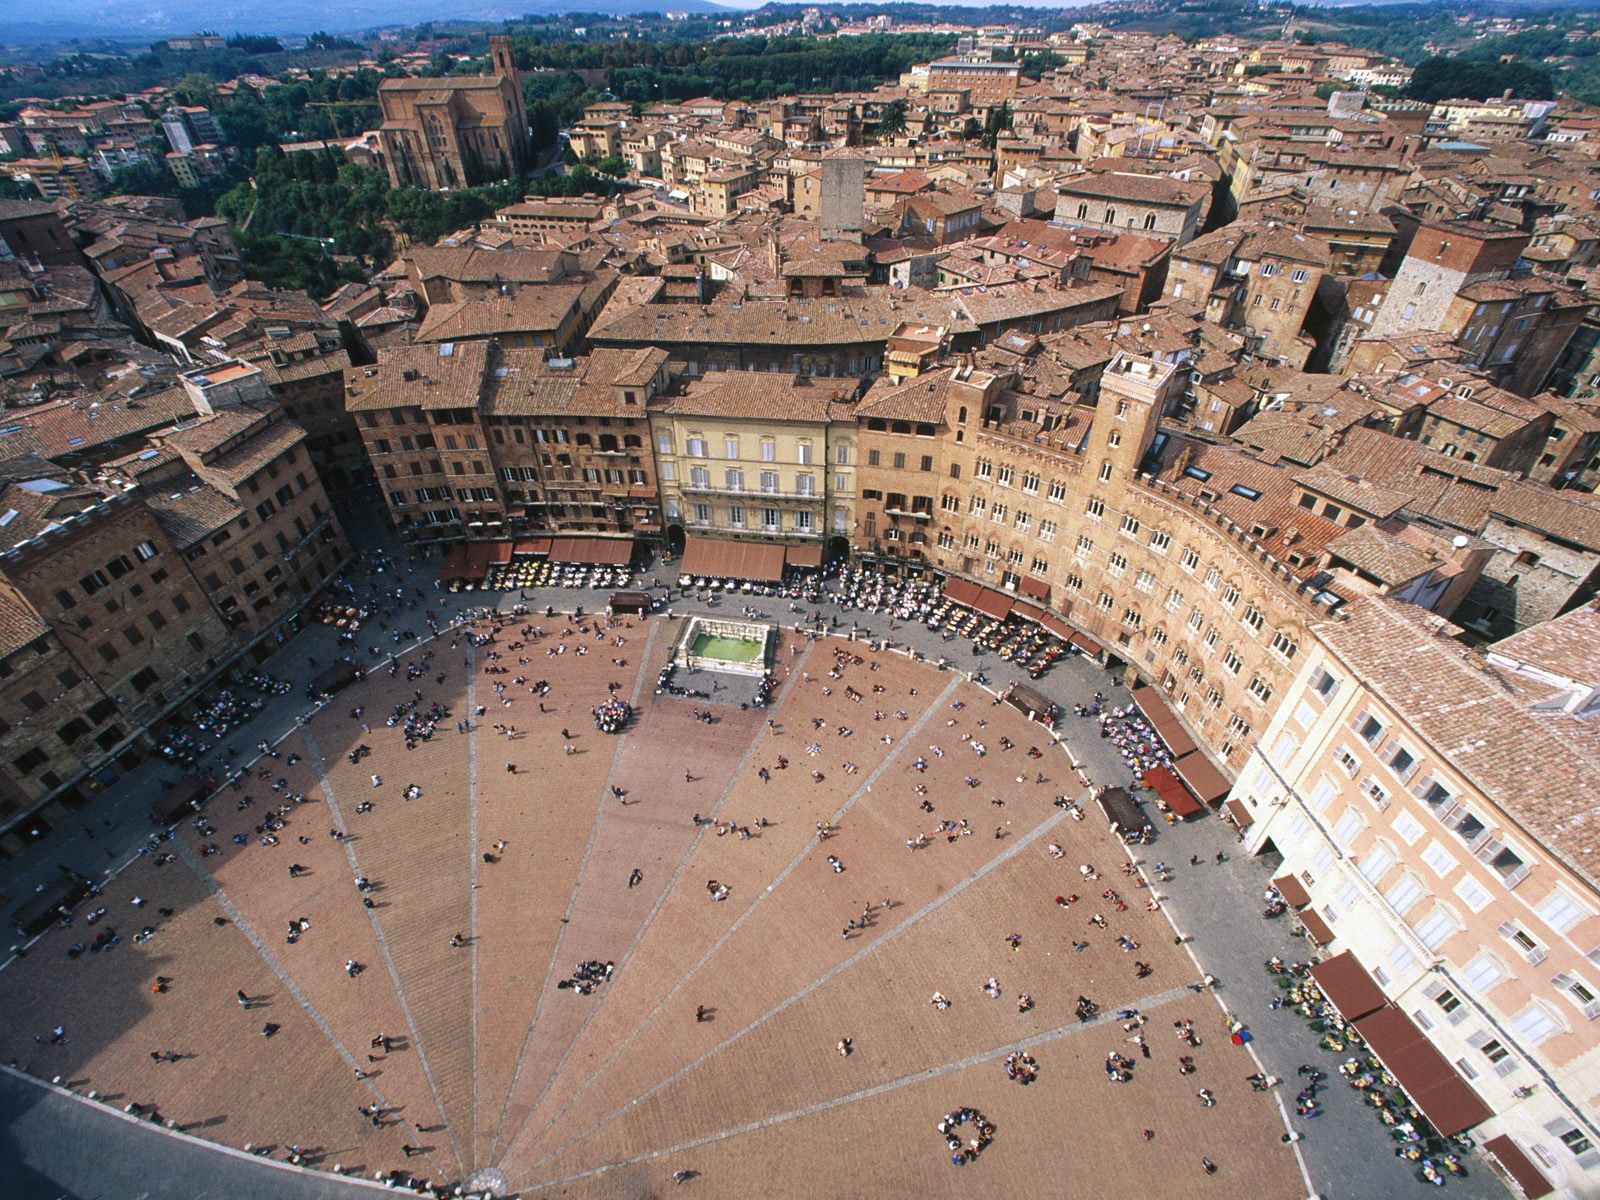 Aerial View of Piazza del Campo Italy470589399 - Aerial View of Piazza del Campo Italy - View, Town, Piazza, Italy, Campo, Aerial